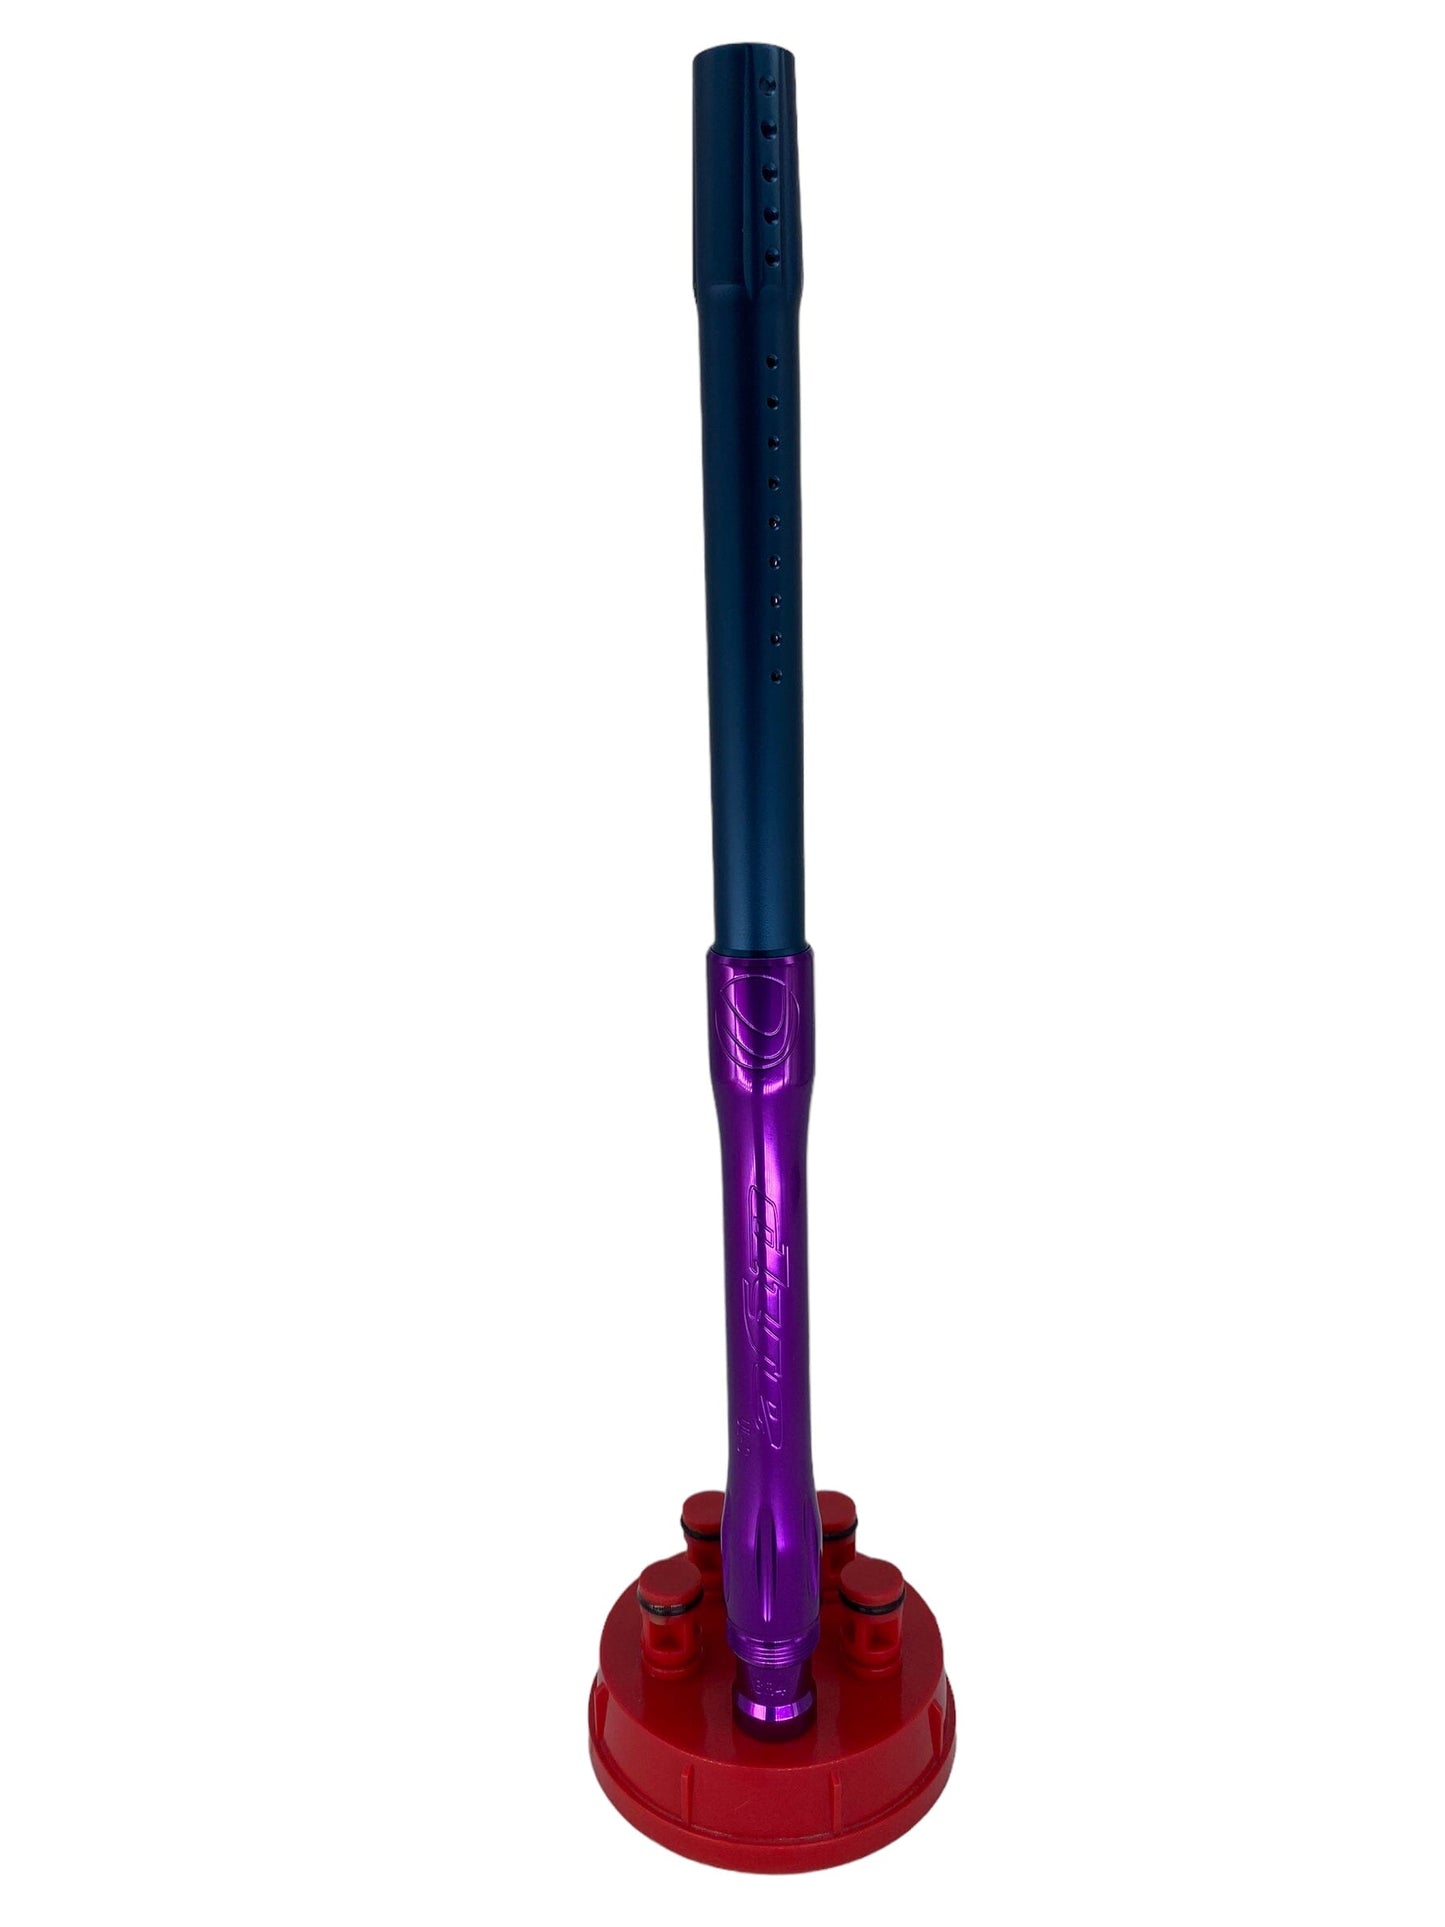 Used Dye UL-S .684 Paintball Barrel - Purple Paintball Gun from CPXBrosPaintball Buy/Sell/Trade Paintball Markers, Paintball Hoppers, Paintball Masks, and Hormesis Headbands